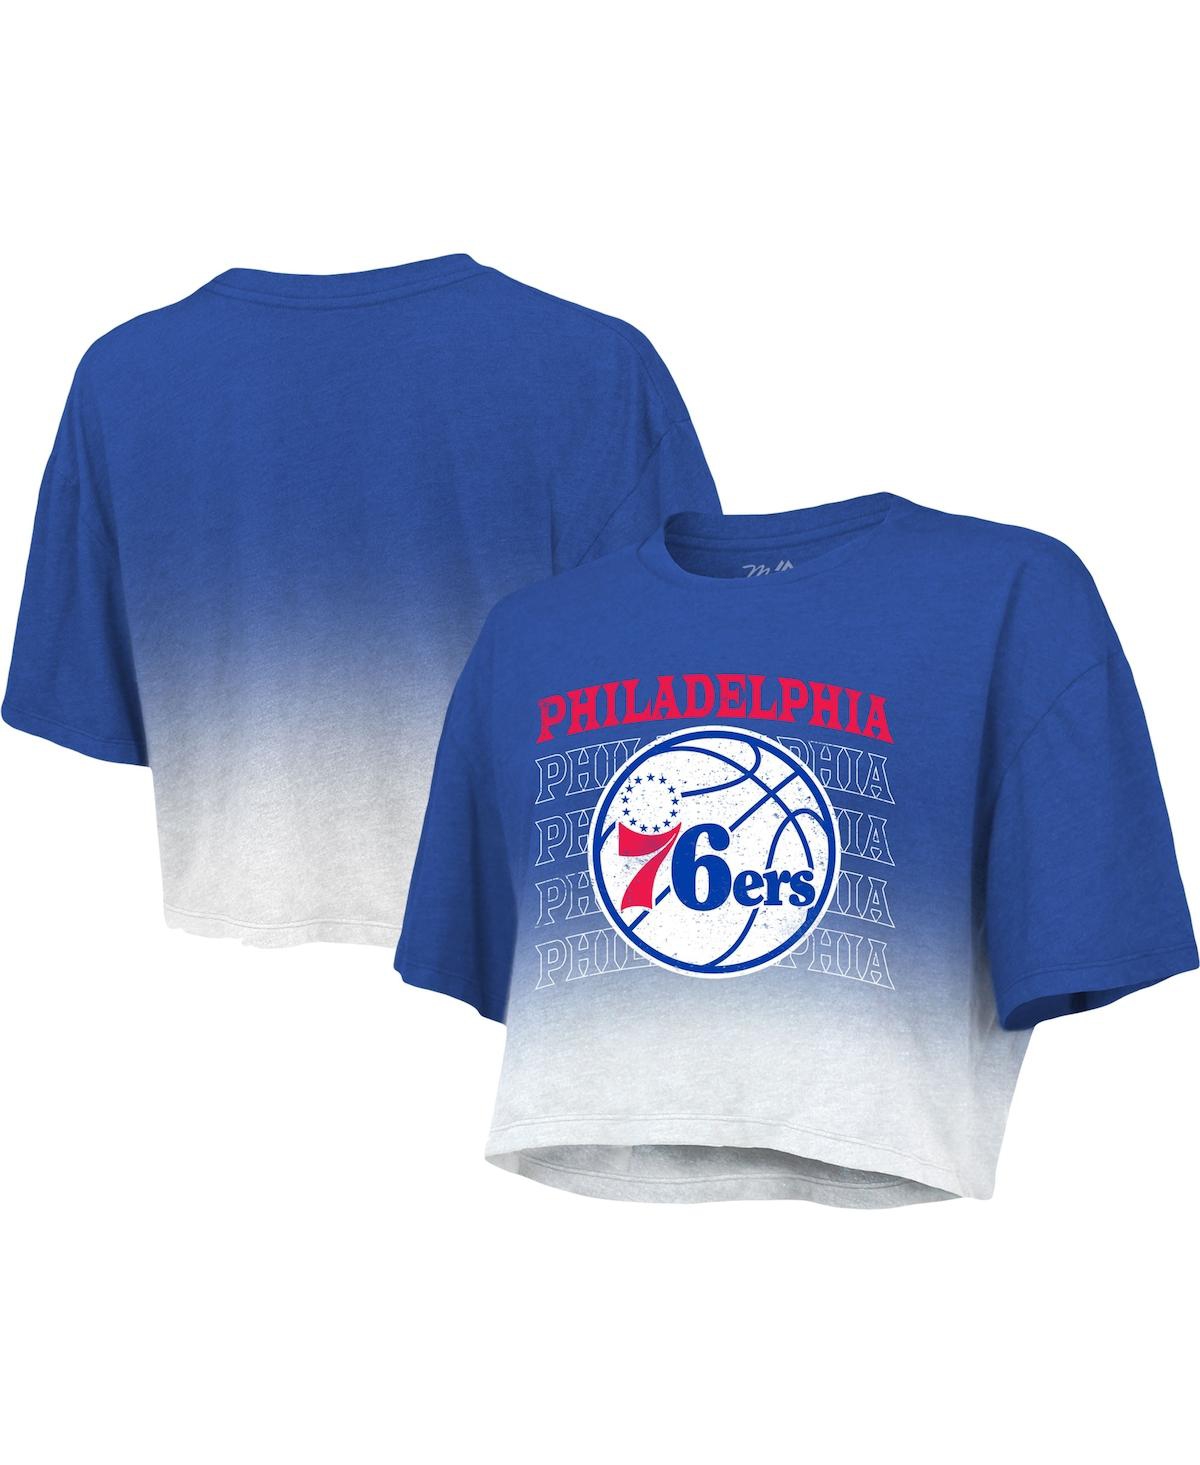 Women's Majestic Threads Royal and White Philadelphia 76ers Repeat Dip-Dye Cropped T-shirt - Royal, White